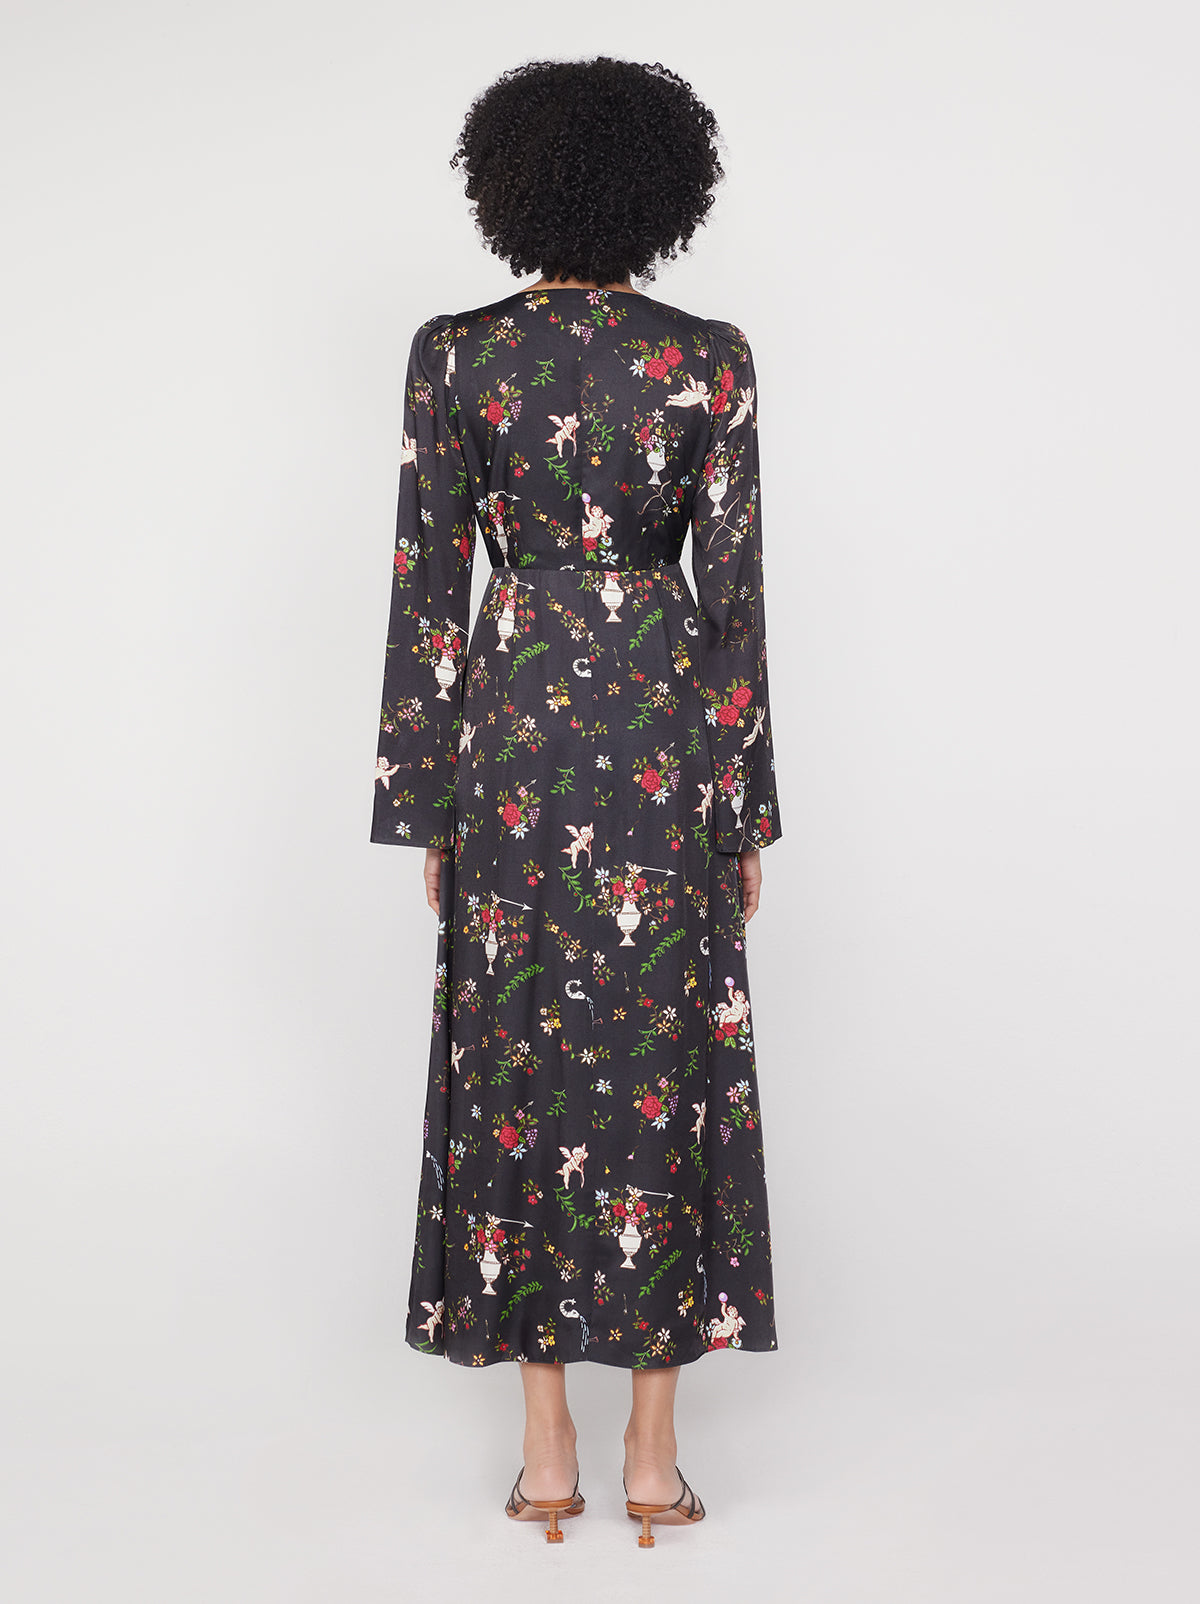 Dolores Black Cherub Print Dress By KITRI Studio